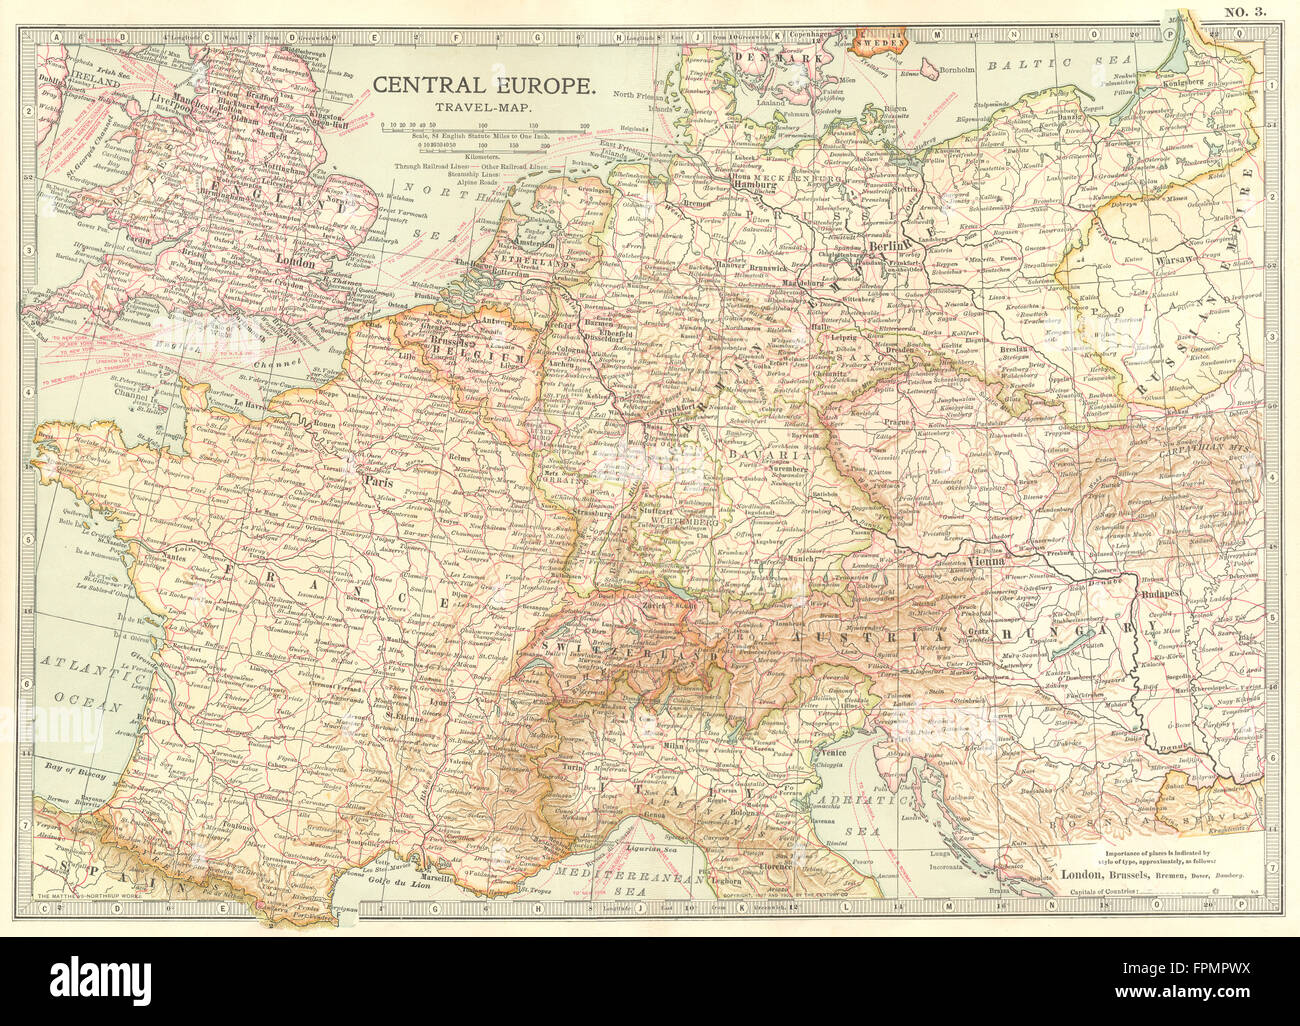 Europa: Mitteleuropa Reisekarte. Eisenbahnen, Dampfschiffe, 1903 Stockfoto